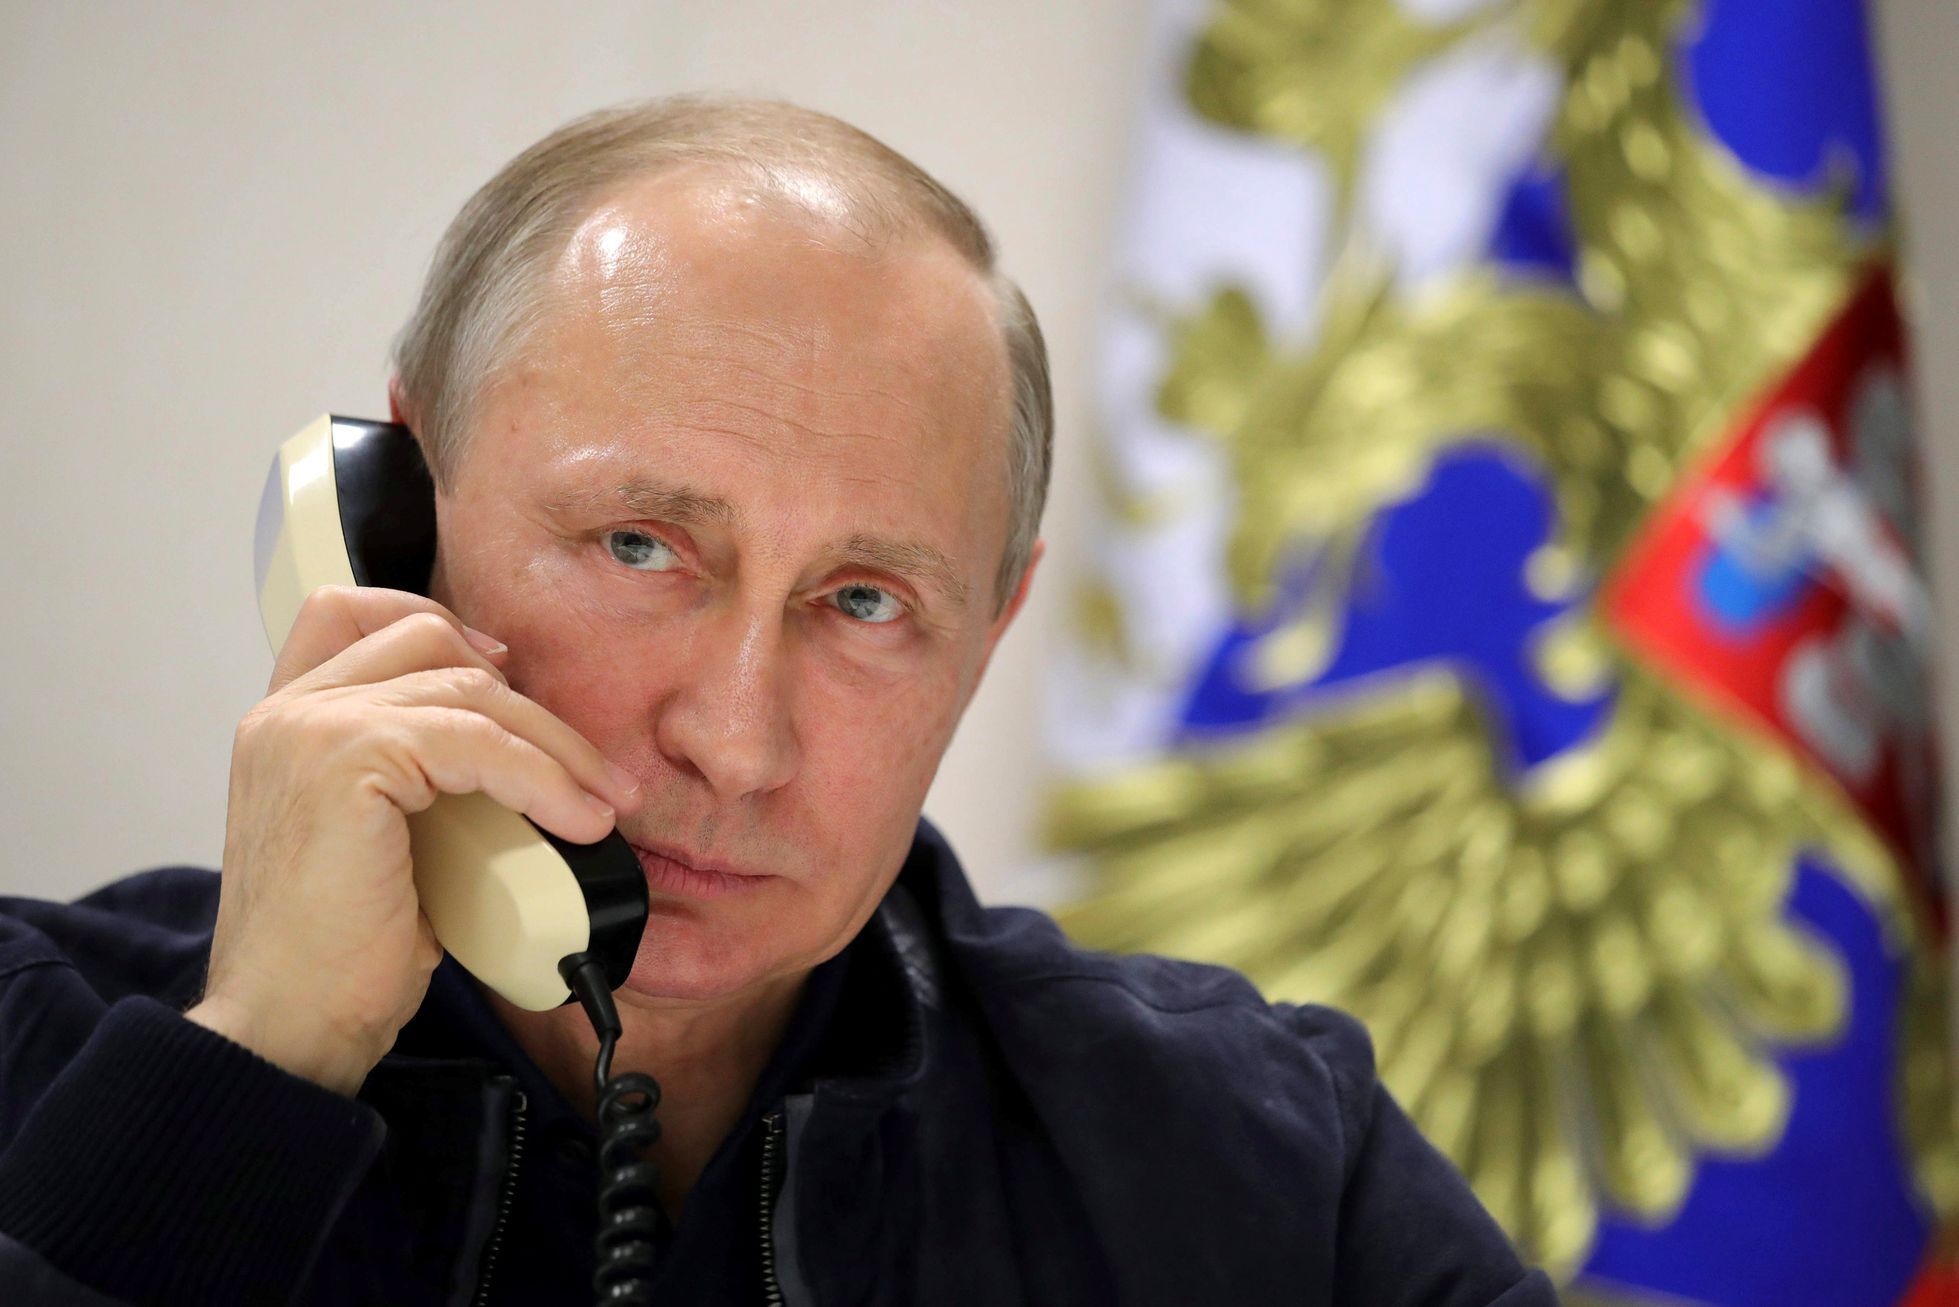 Putin telefonuje s Erdoganem